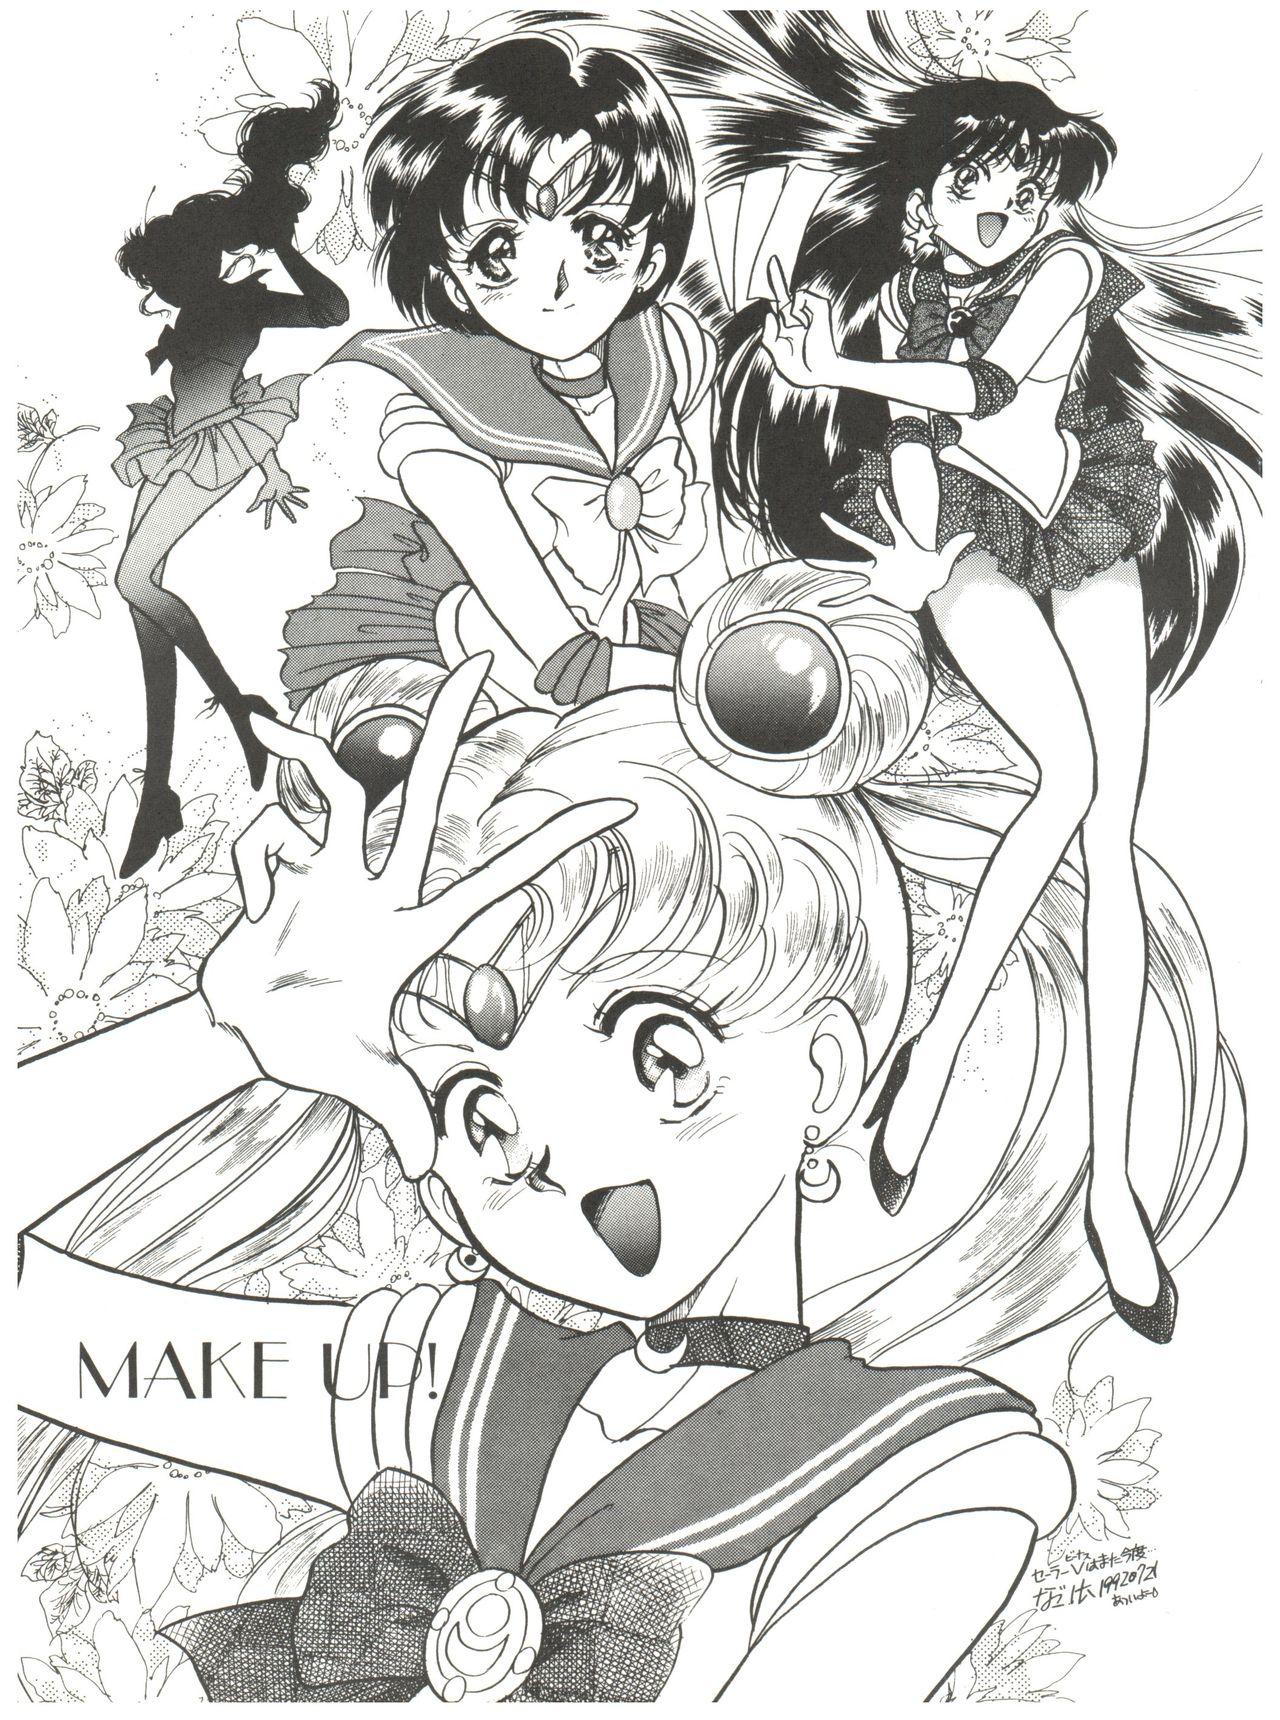 Jockstrap MAKE UP - Sailor moon Suruba - Page 2